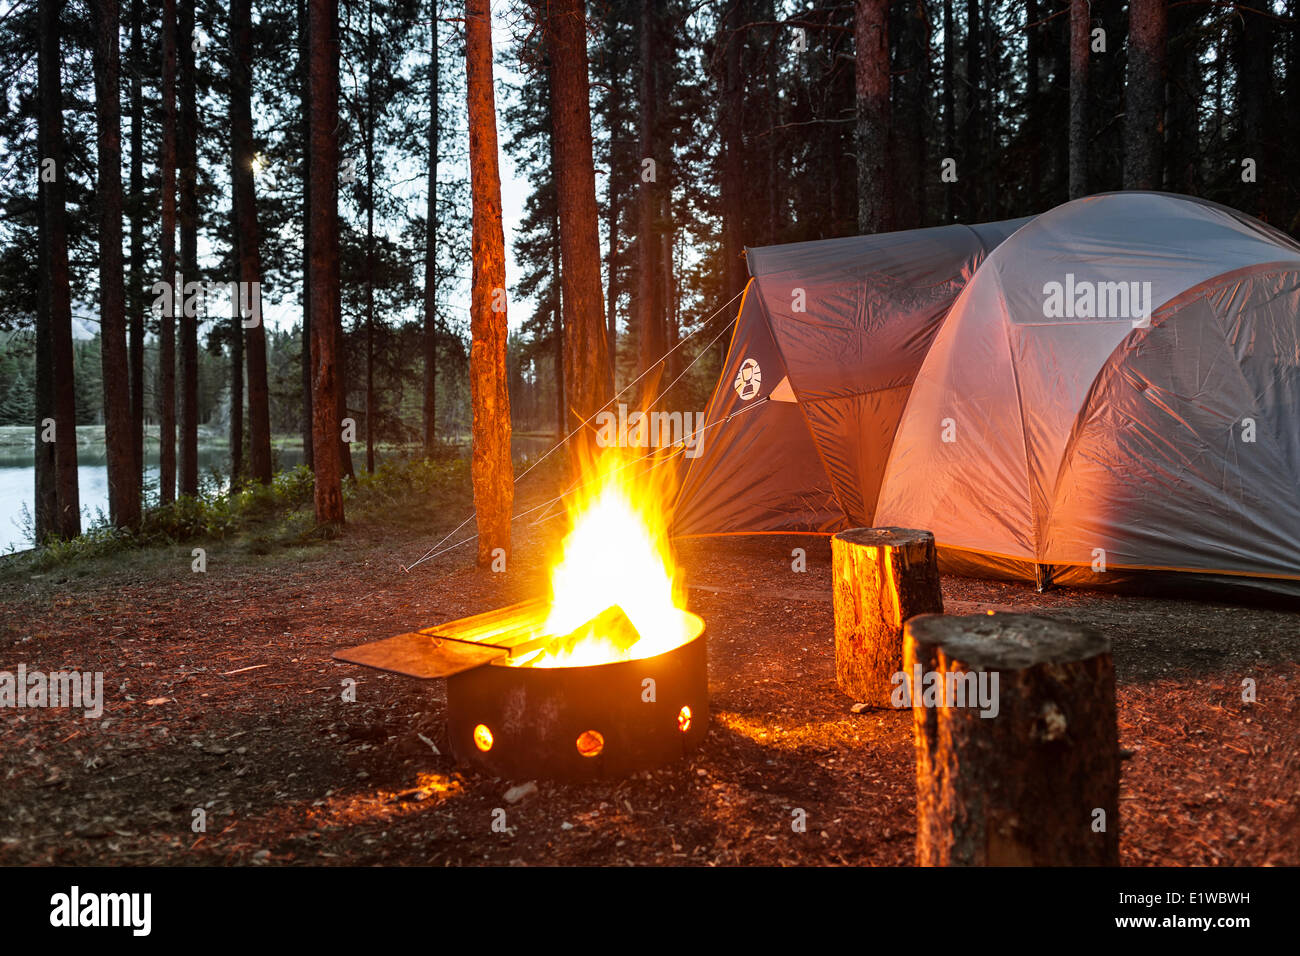 Camping banff national park alberta -Fotos und -Bildmaterial in hoher  Auflösung – Alamy